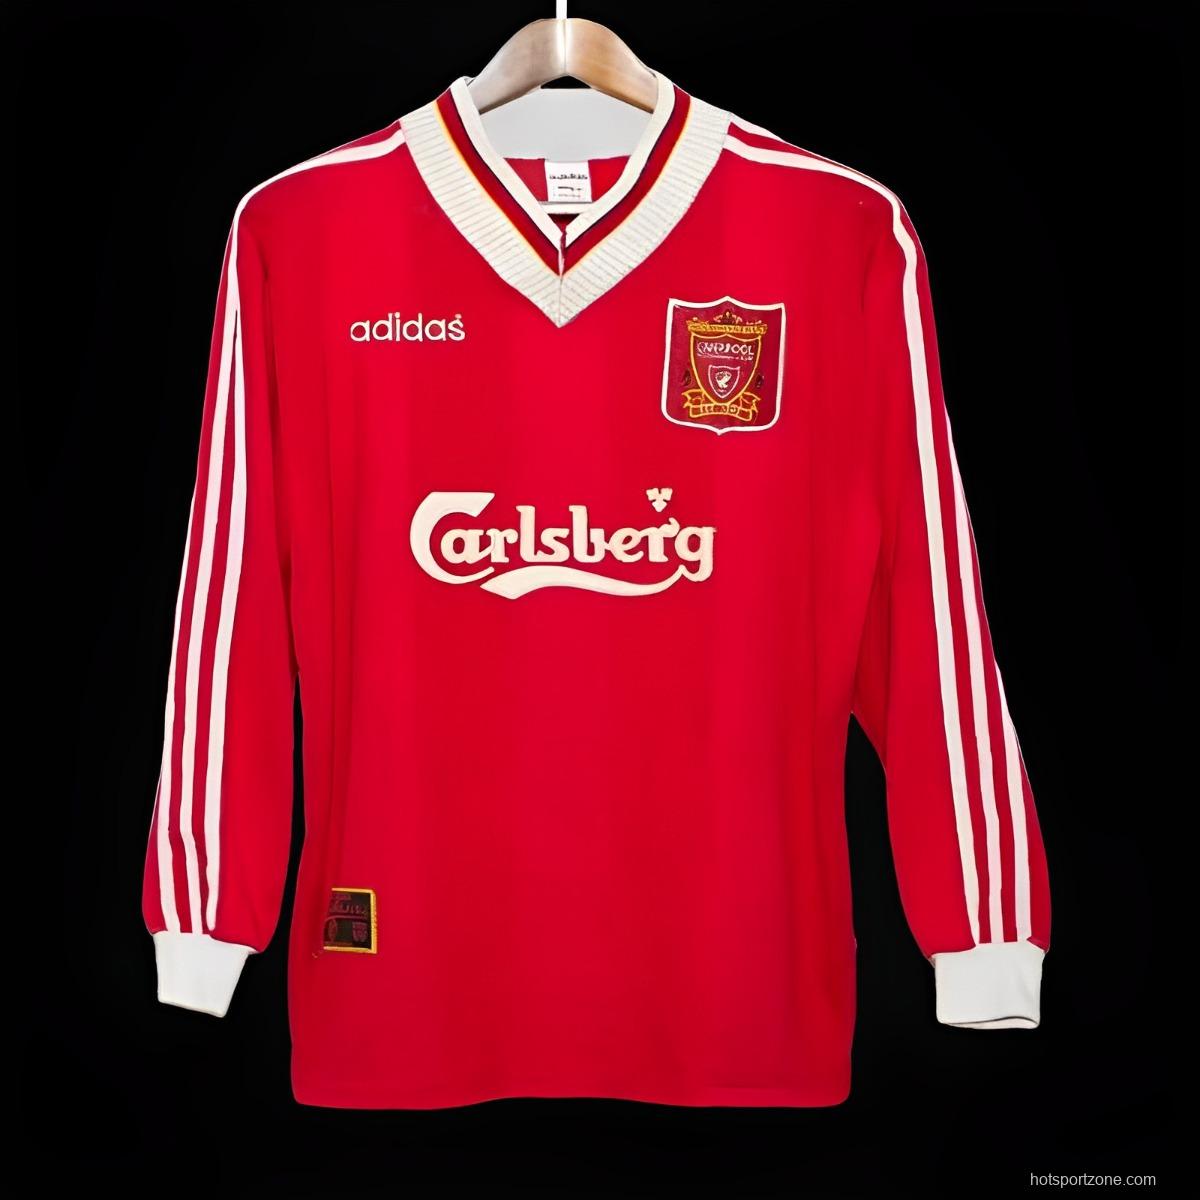 Retro 95/96 Liverpool Home Long Sleeve Jersey